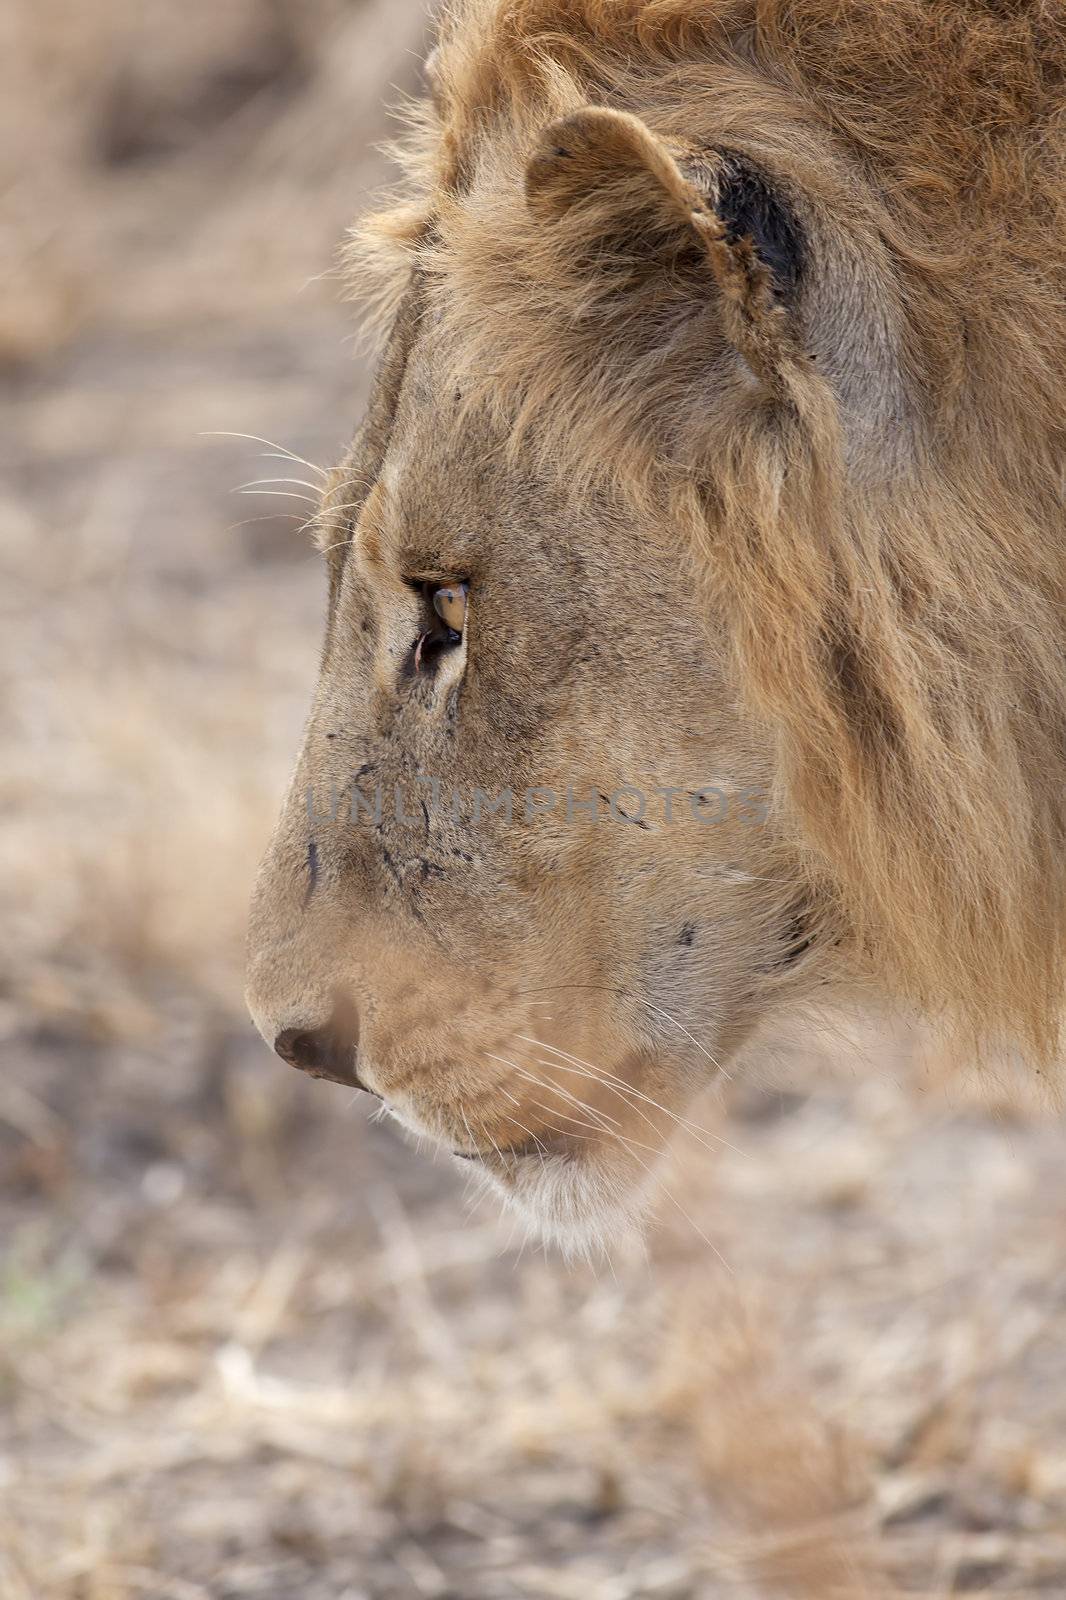 Wild lion in the African Savannah, Tanzania